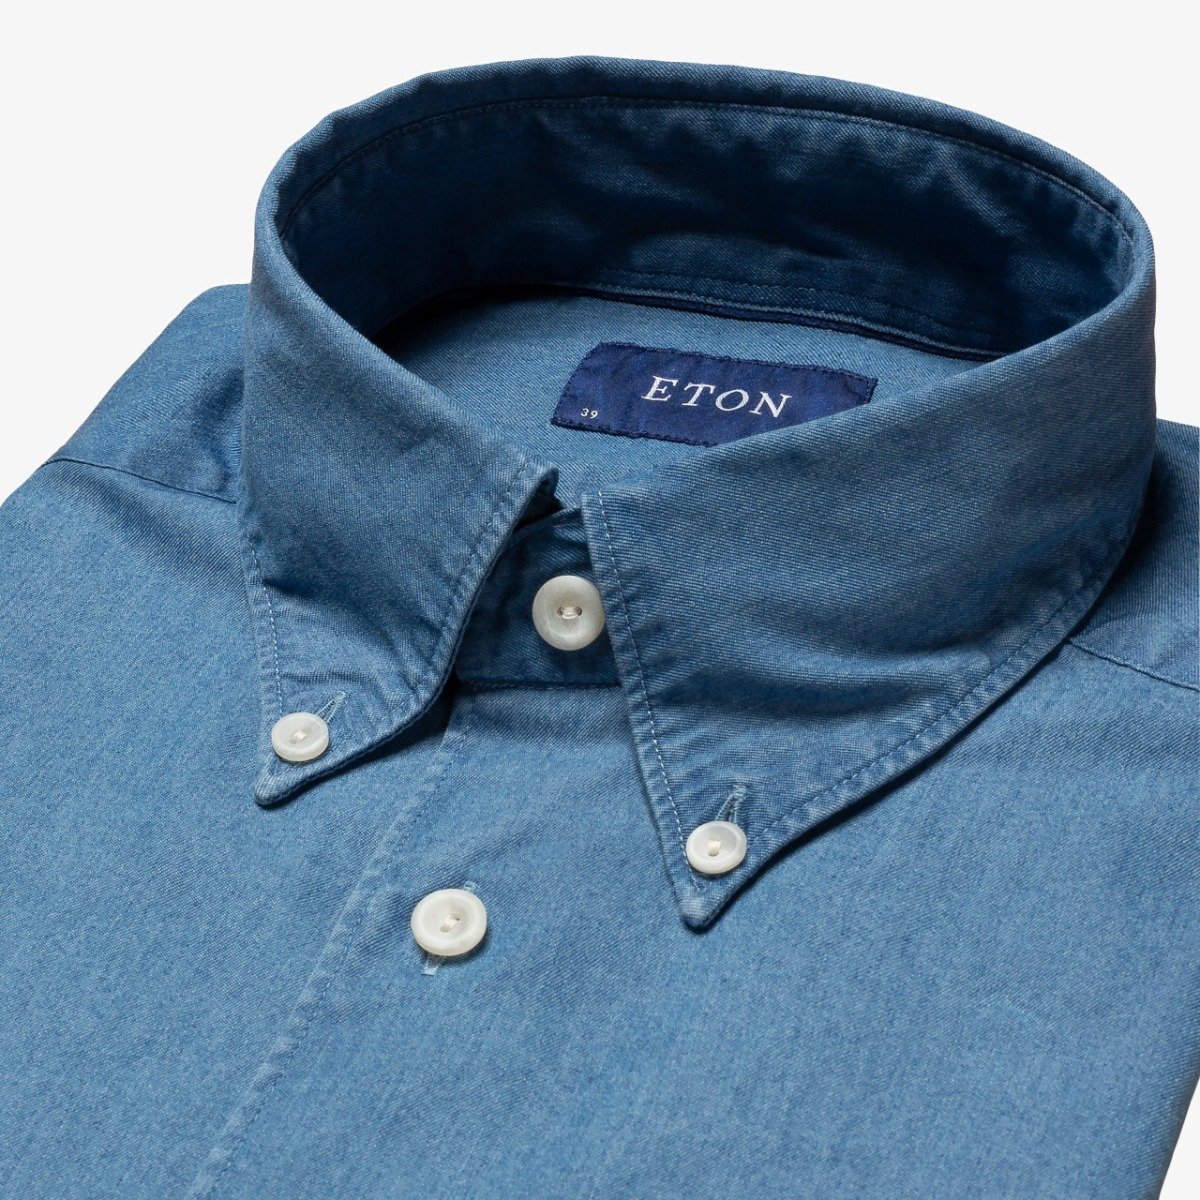 Eton mid blue slim fit lightweight denim men's casual shirt - Button down collar